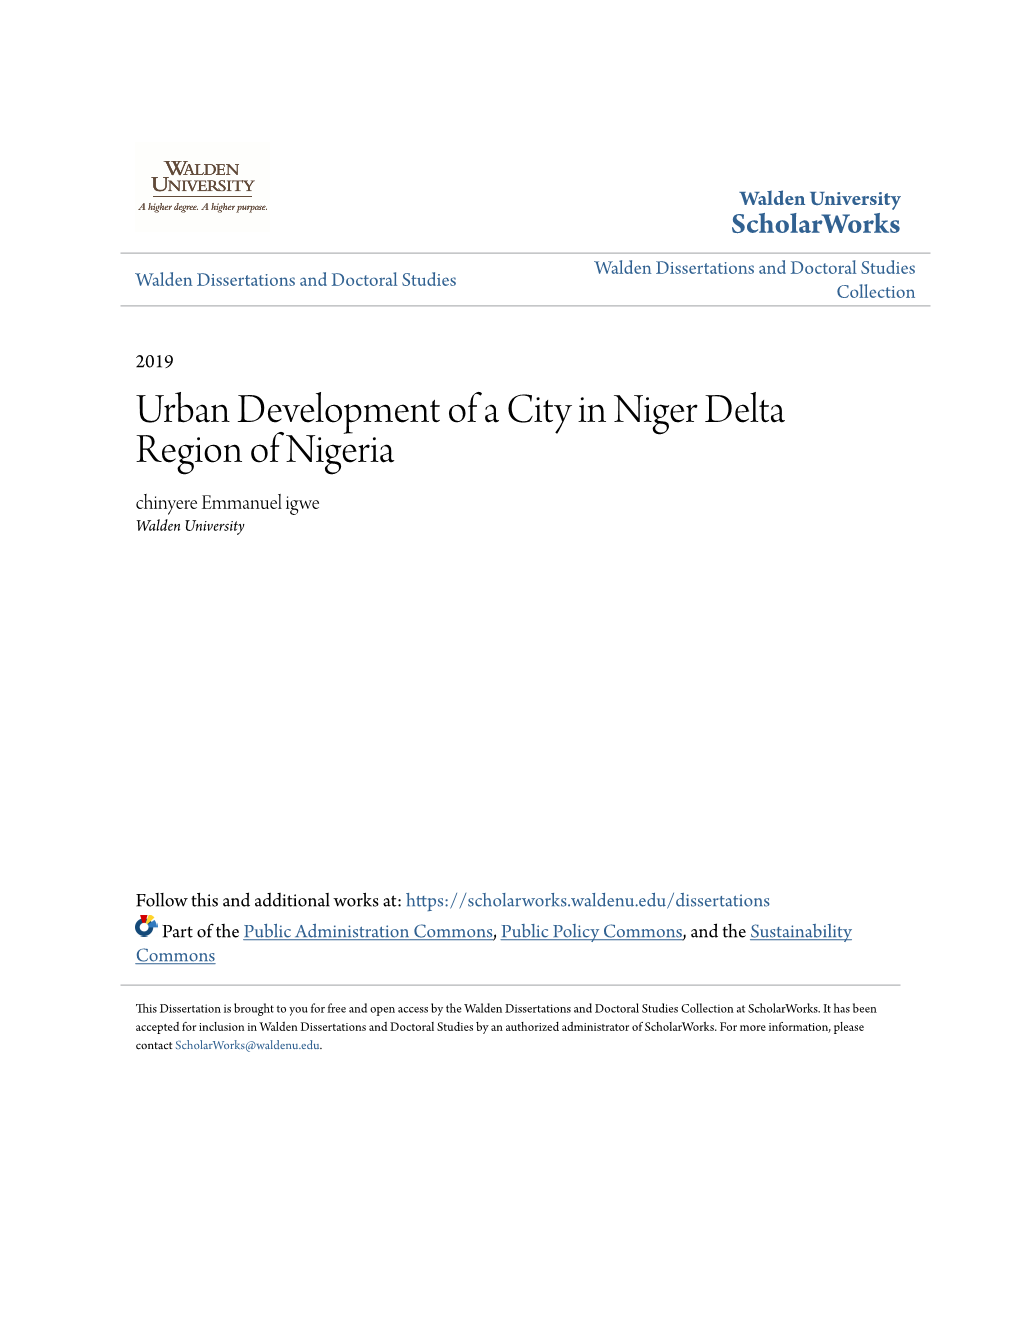 Urban Development of a City in Niger Delta Region of Nigeria Chinyere Emmanuel Igwe Walden University